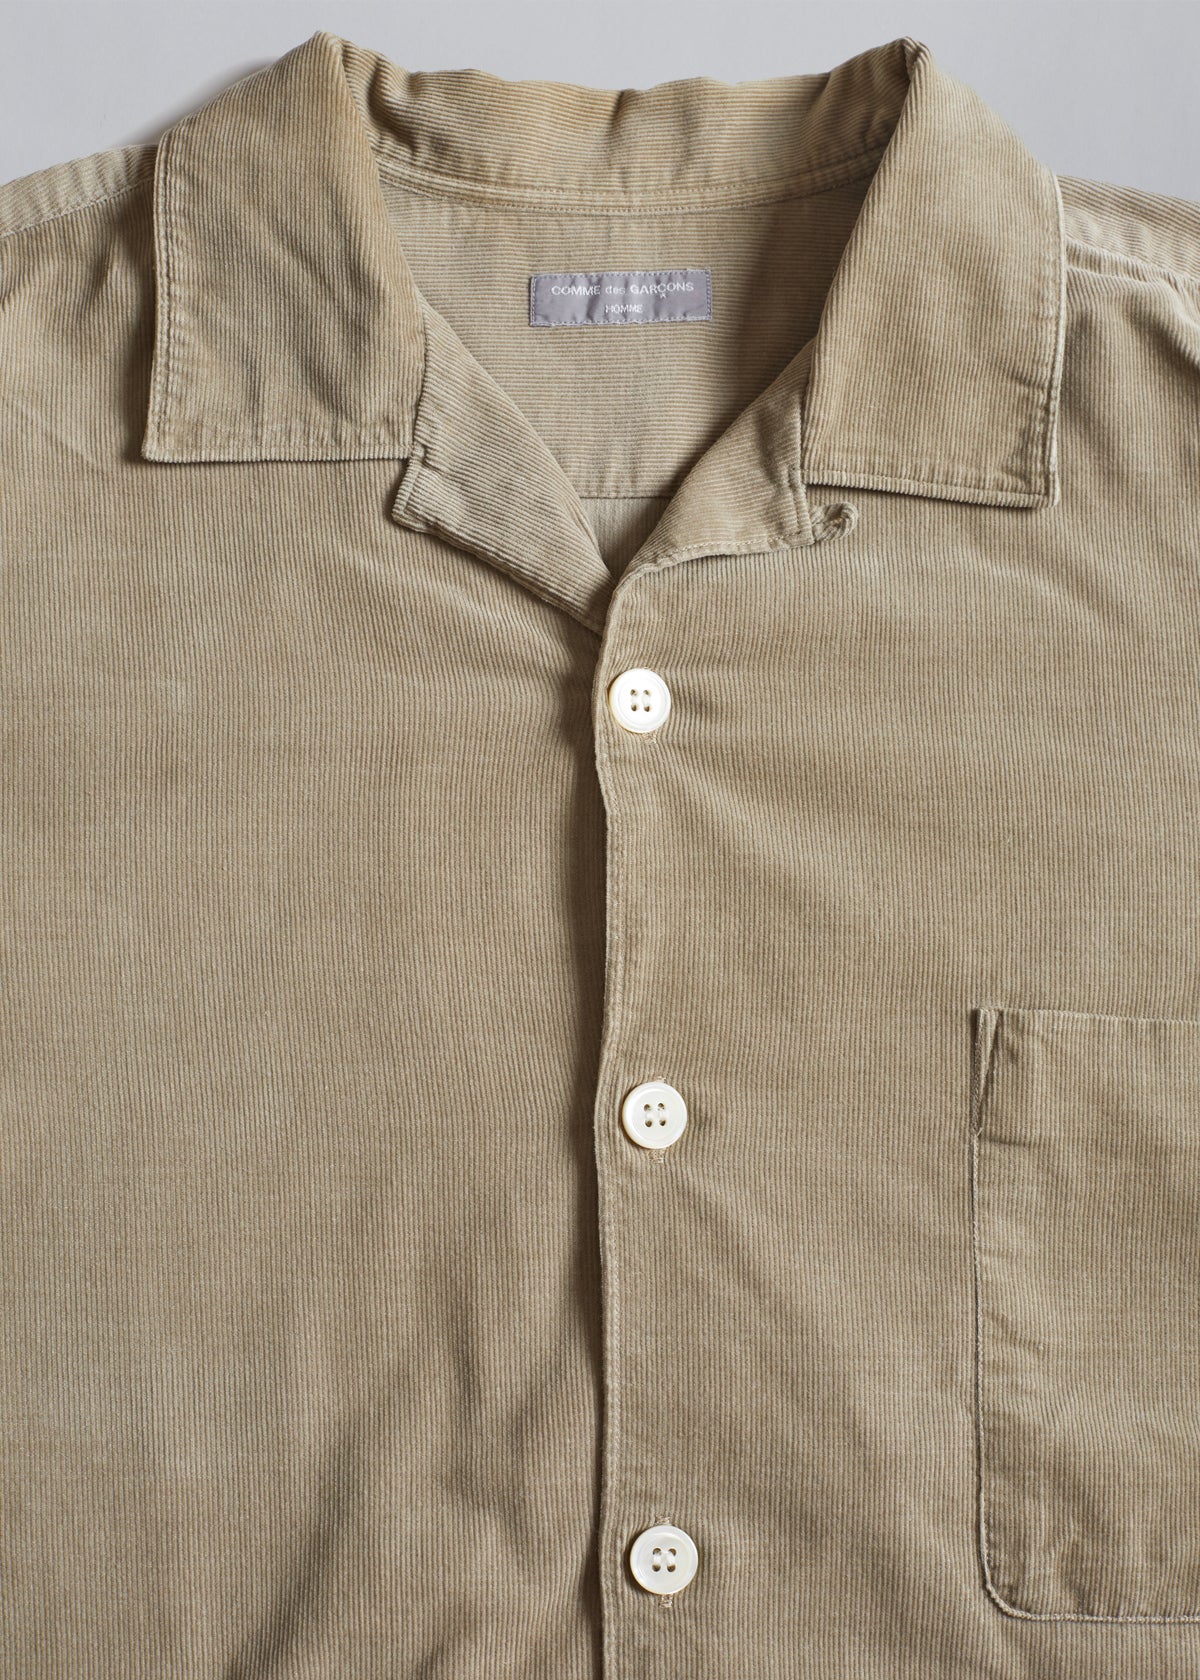 Homme Corduroy Shirt 2000 - Large - The Archivist Store